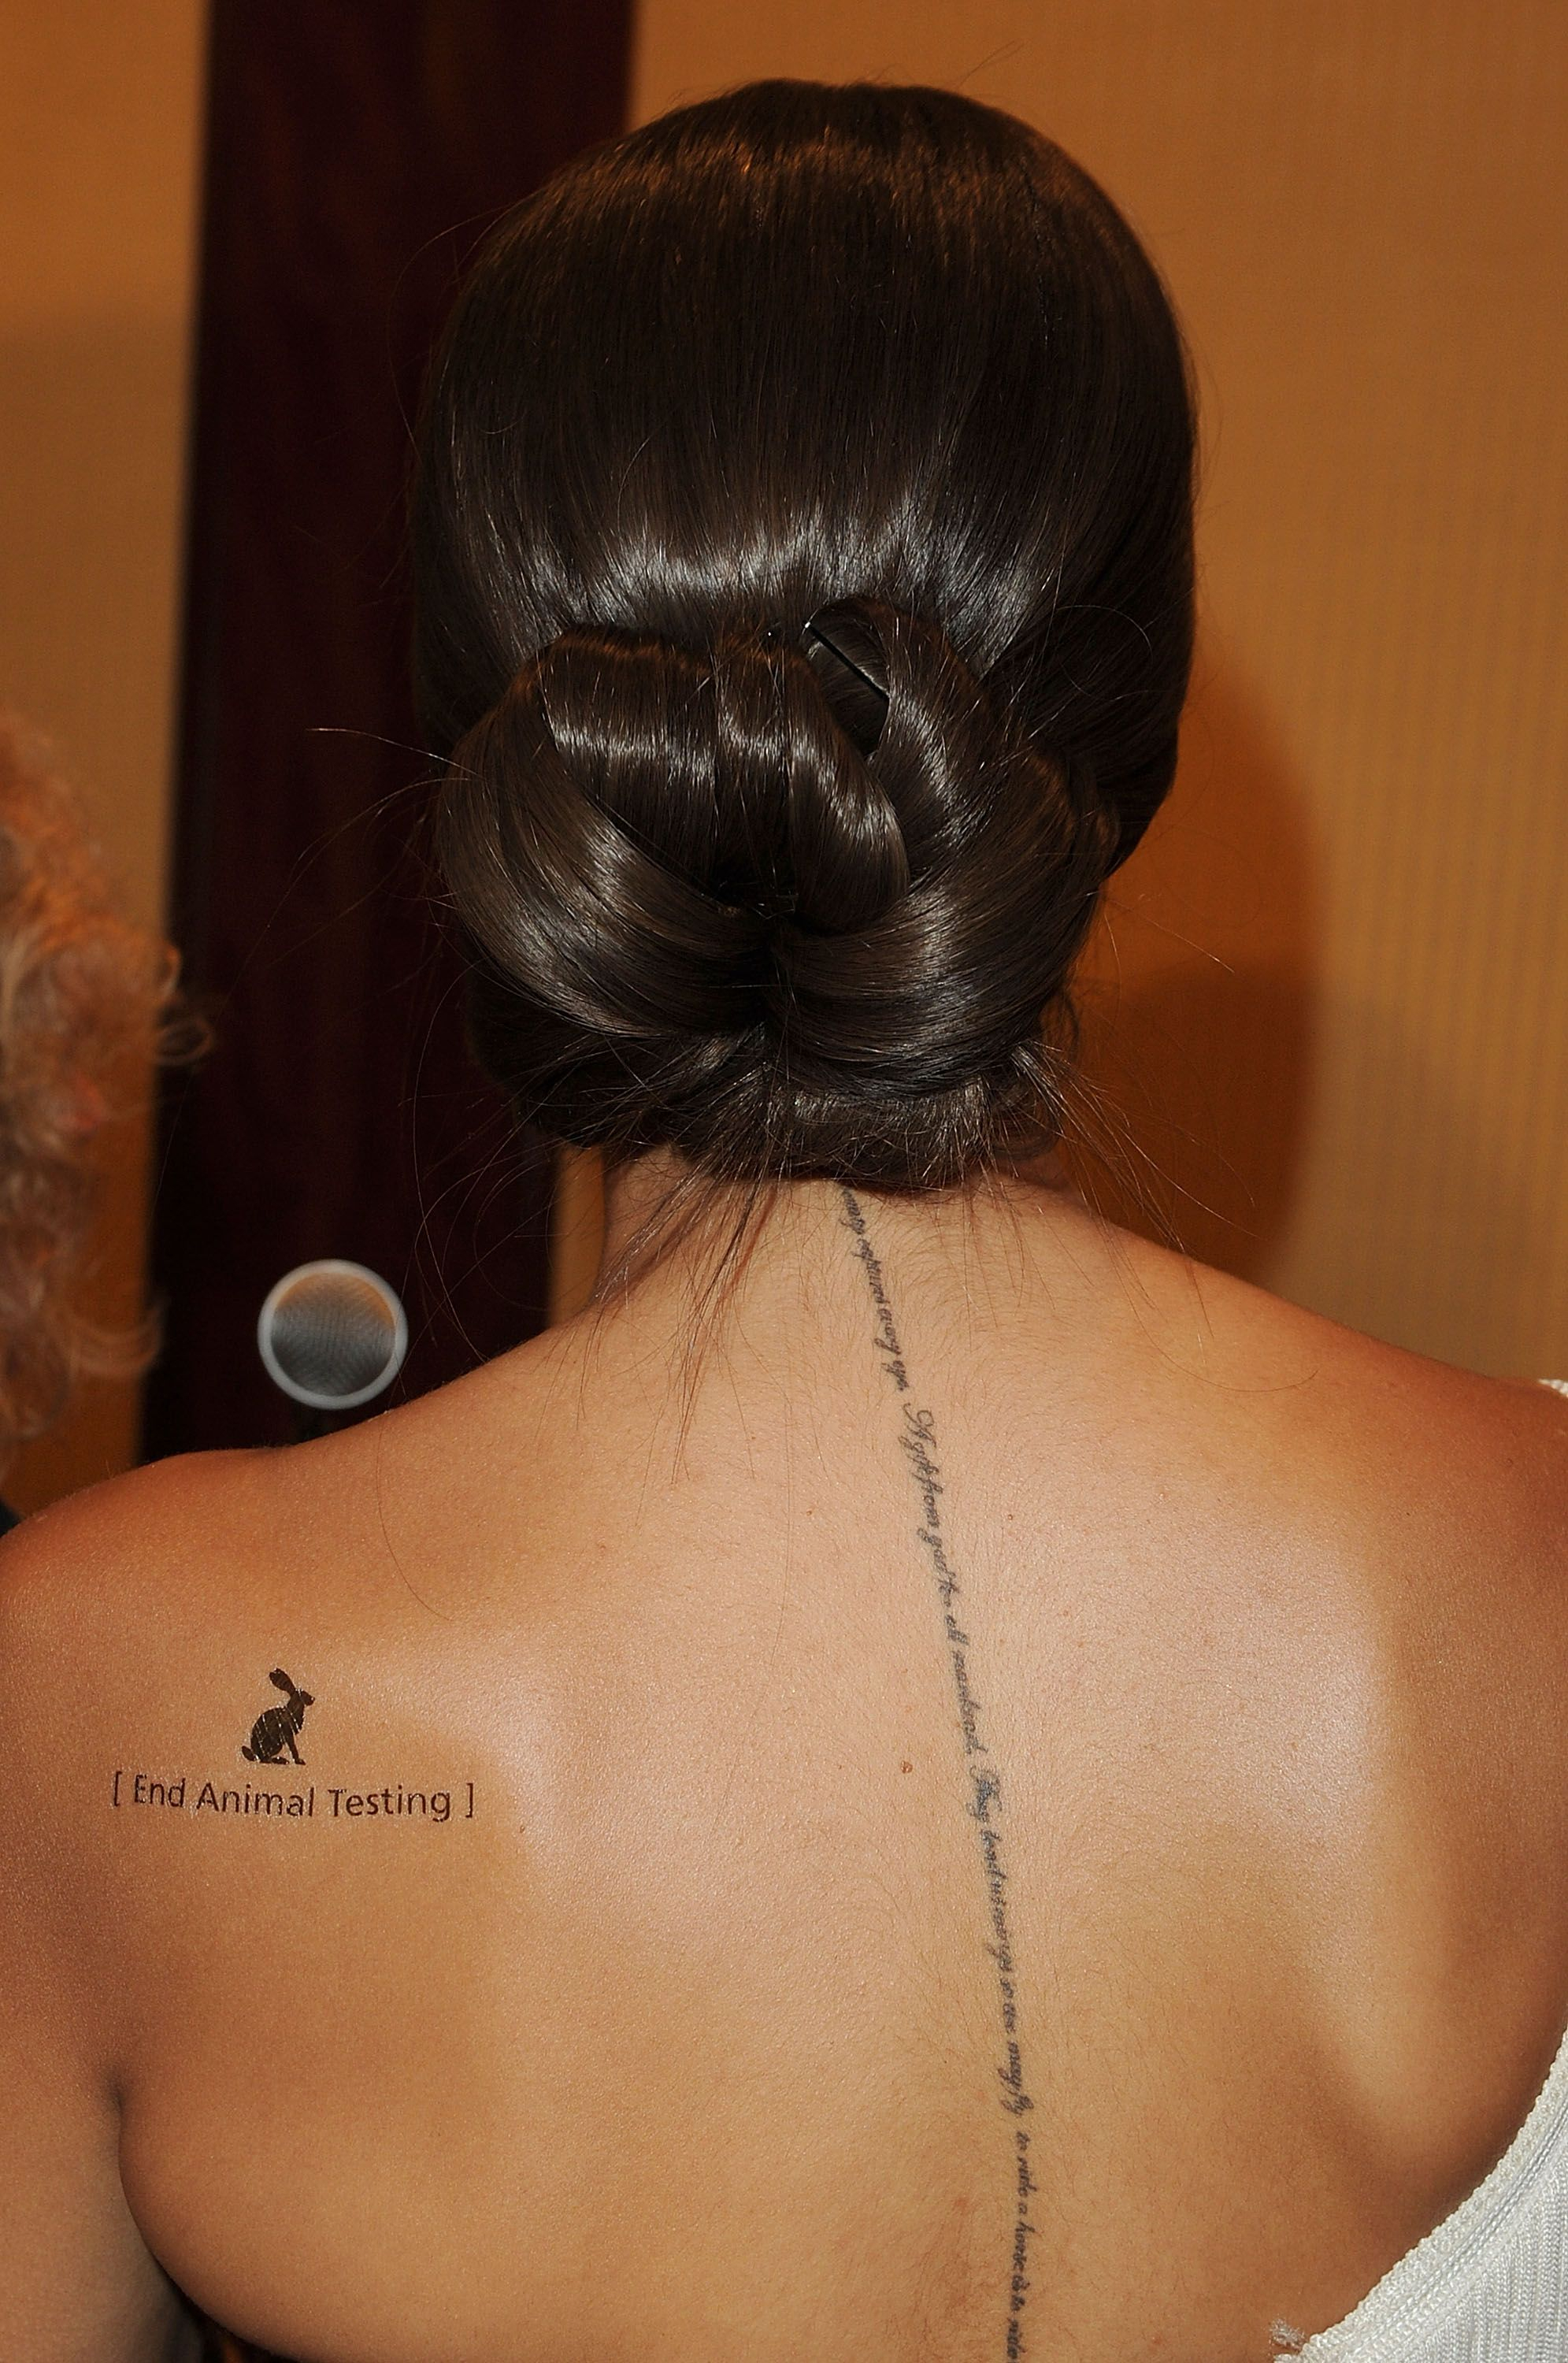 Leona Lewis Spine Tattoo Jason Merritt Plus Shoulder Blade Tat within sizing 1991 X 3000